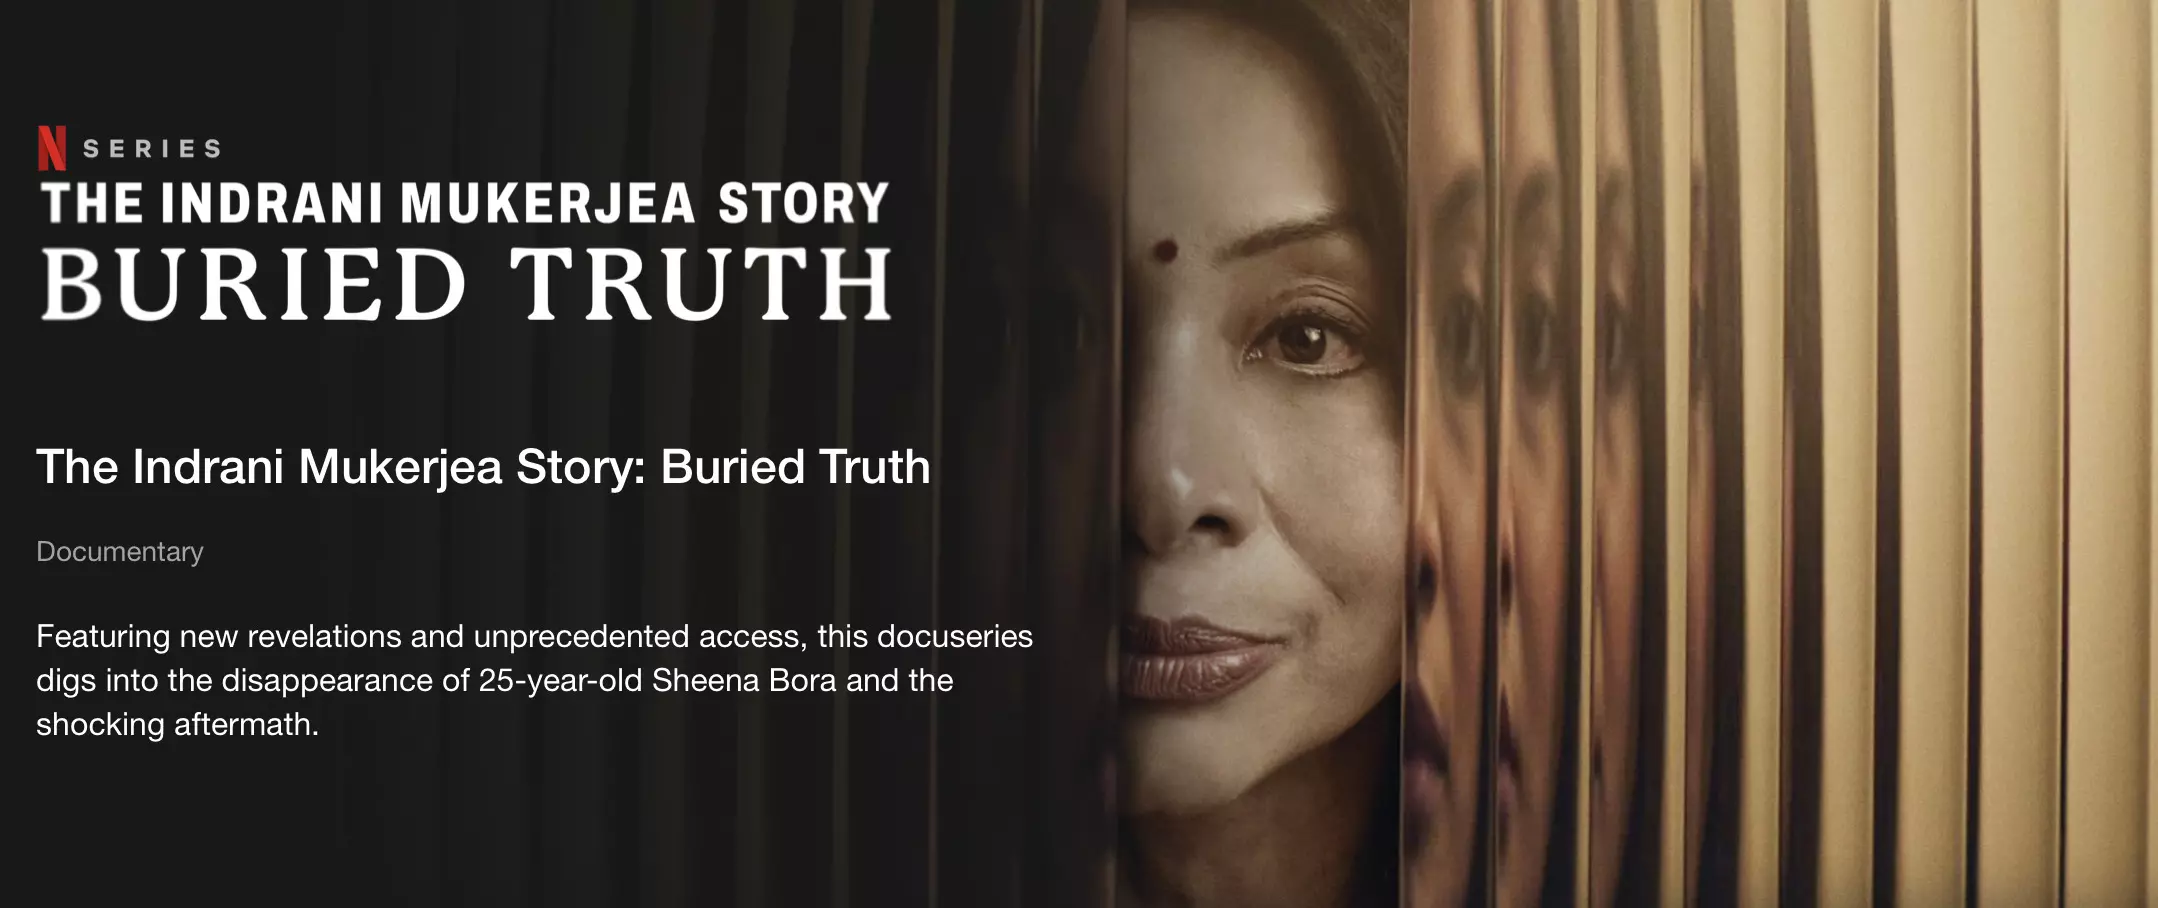 Netflixs The Indrani Mukerjea Story: Buried Truth, streams February 23